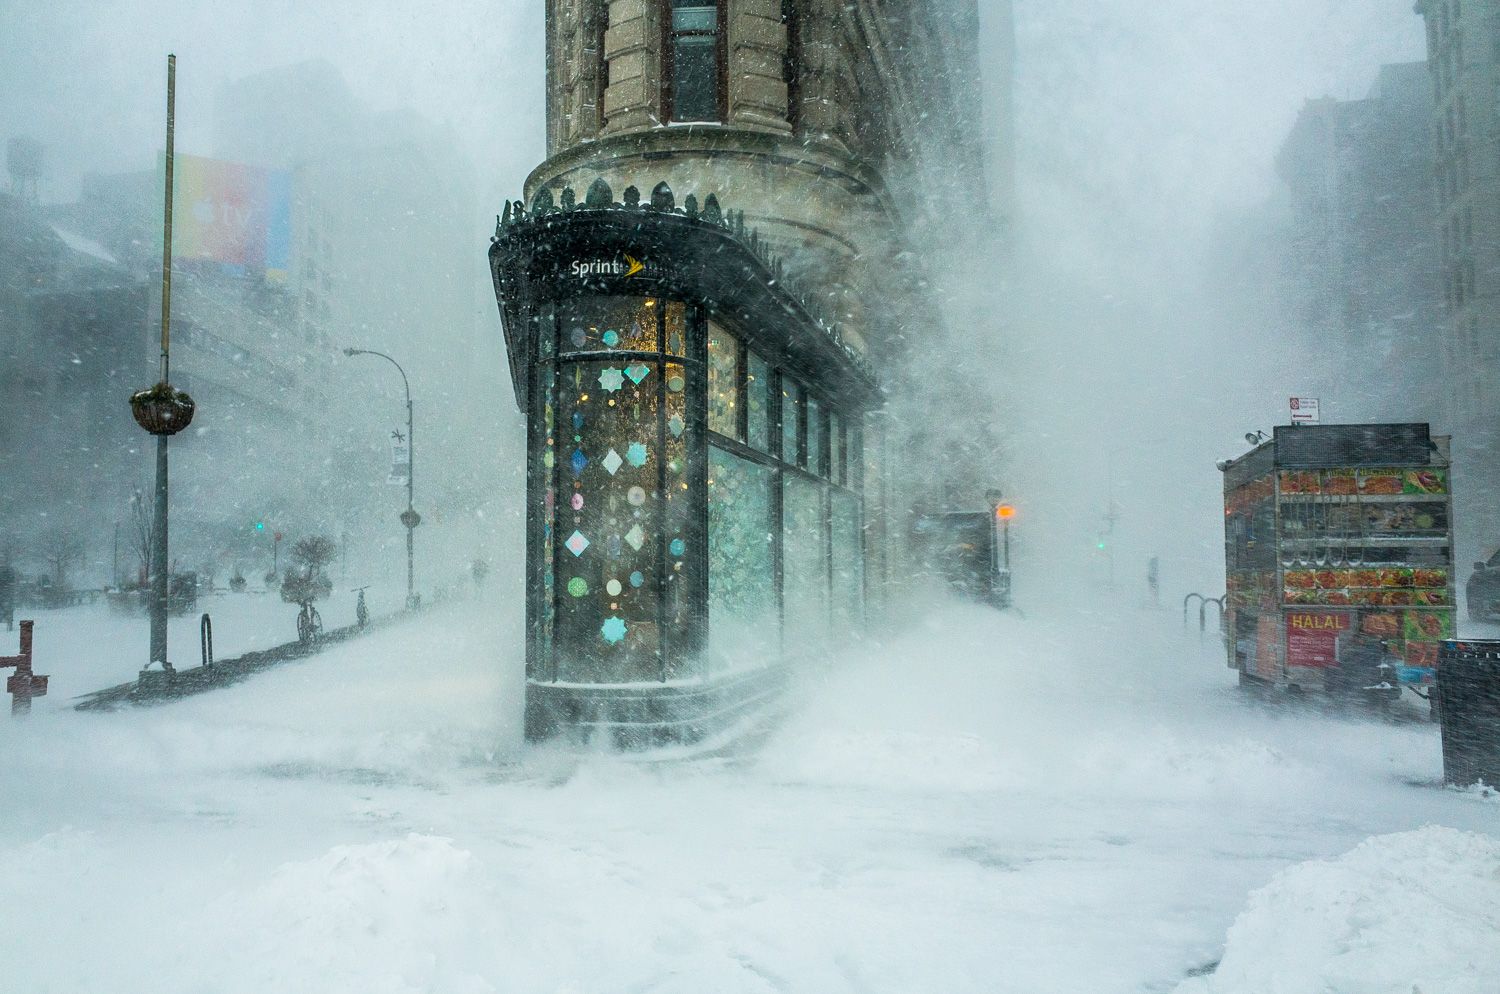 Flatiron Building in the snowstorm